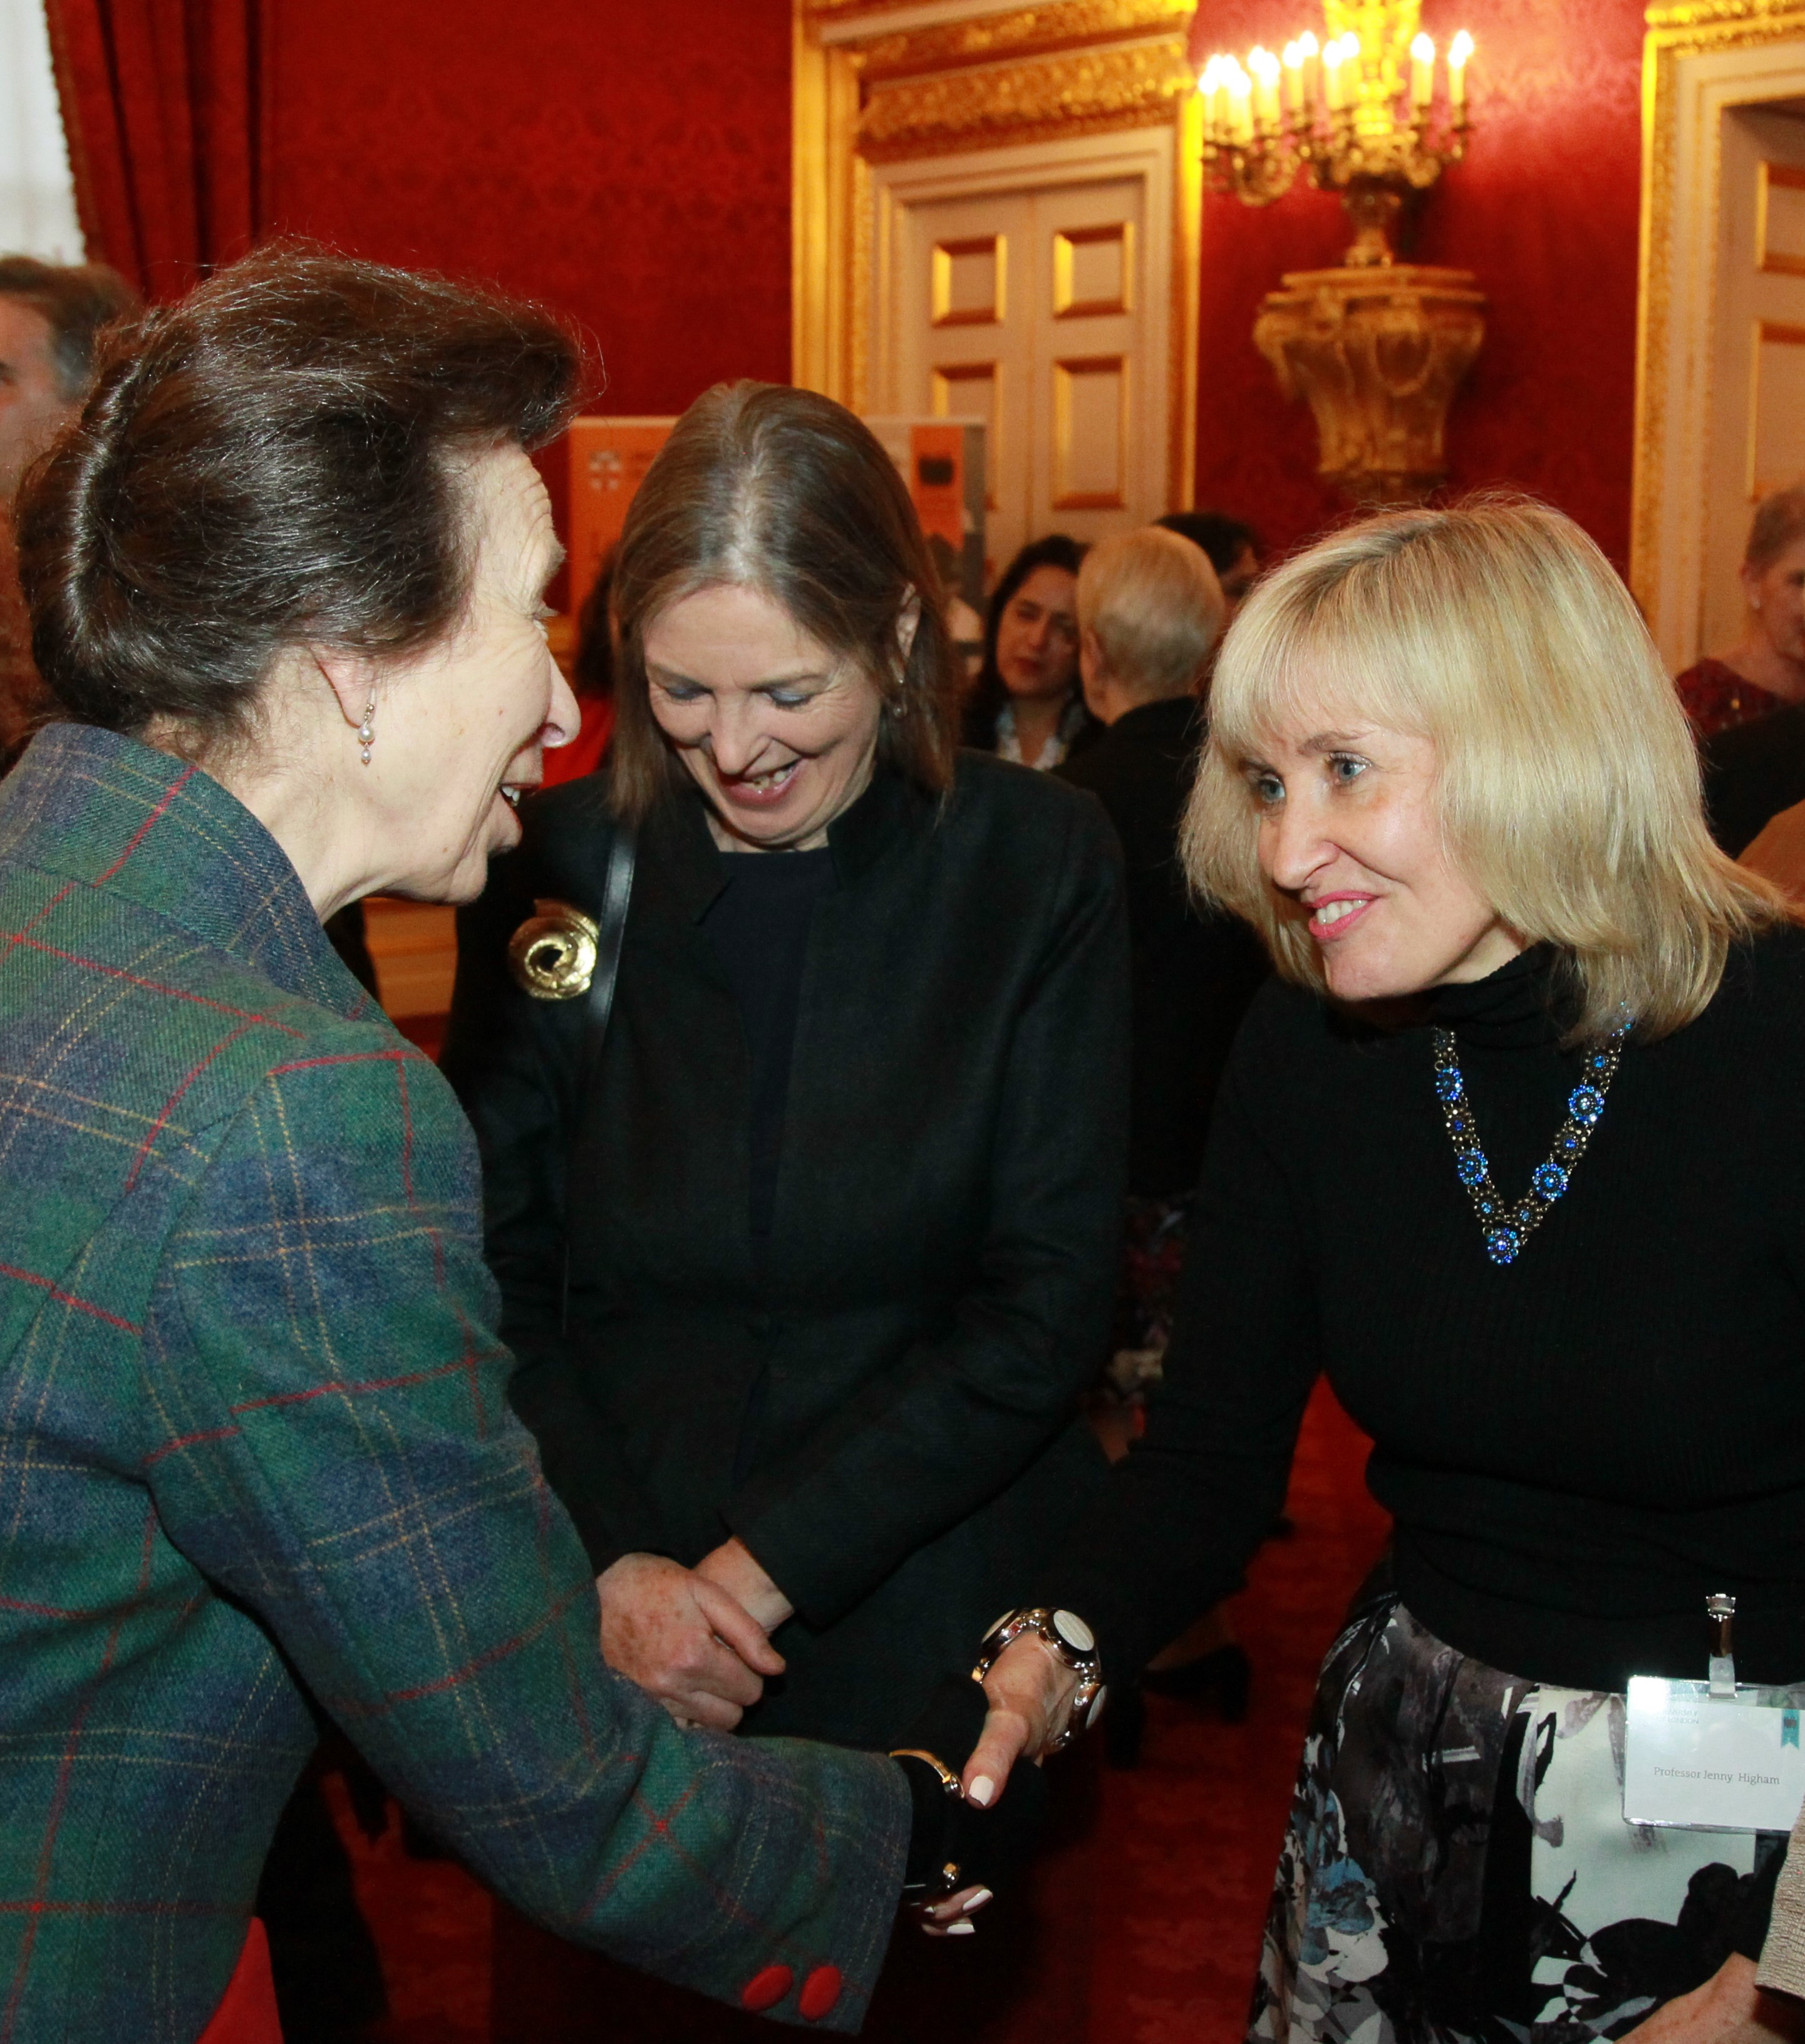 The Princess Royal meets people at the reception